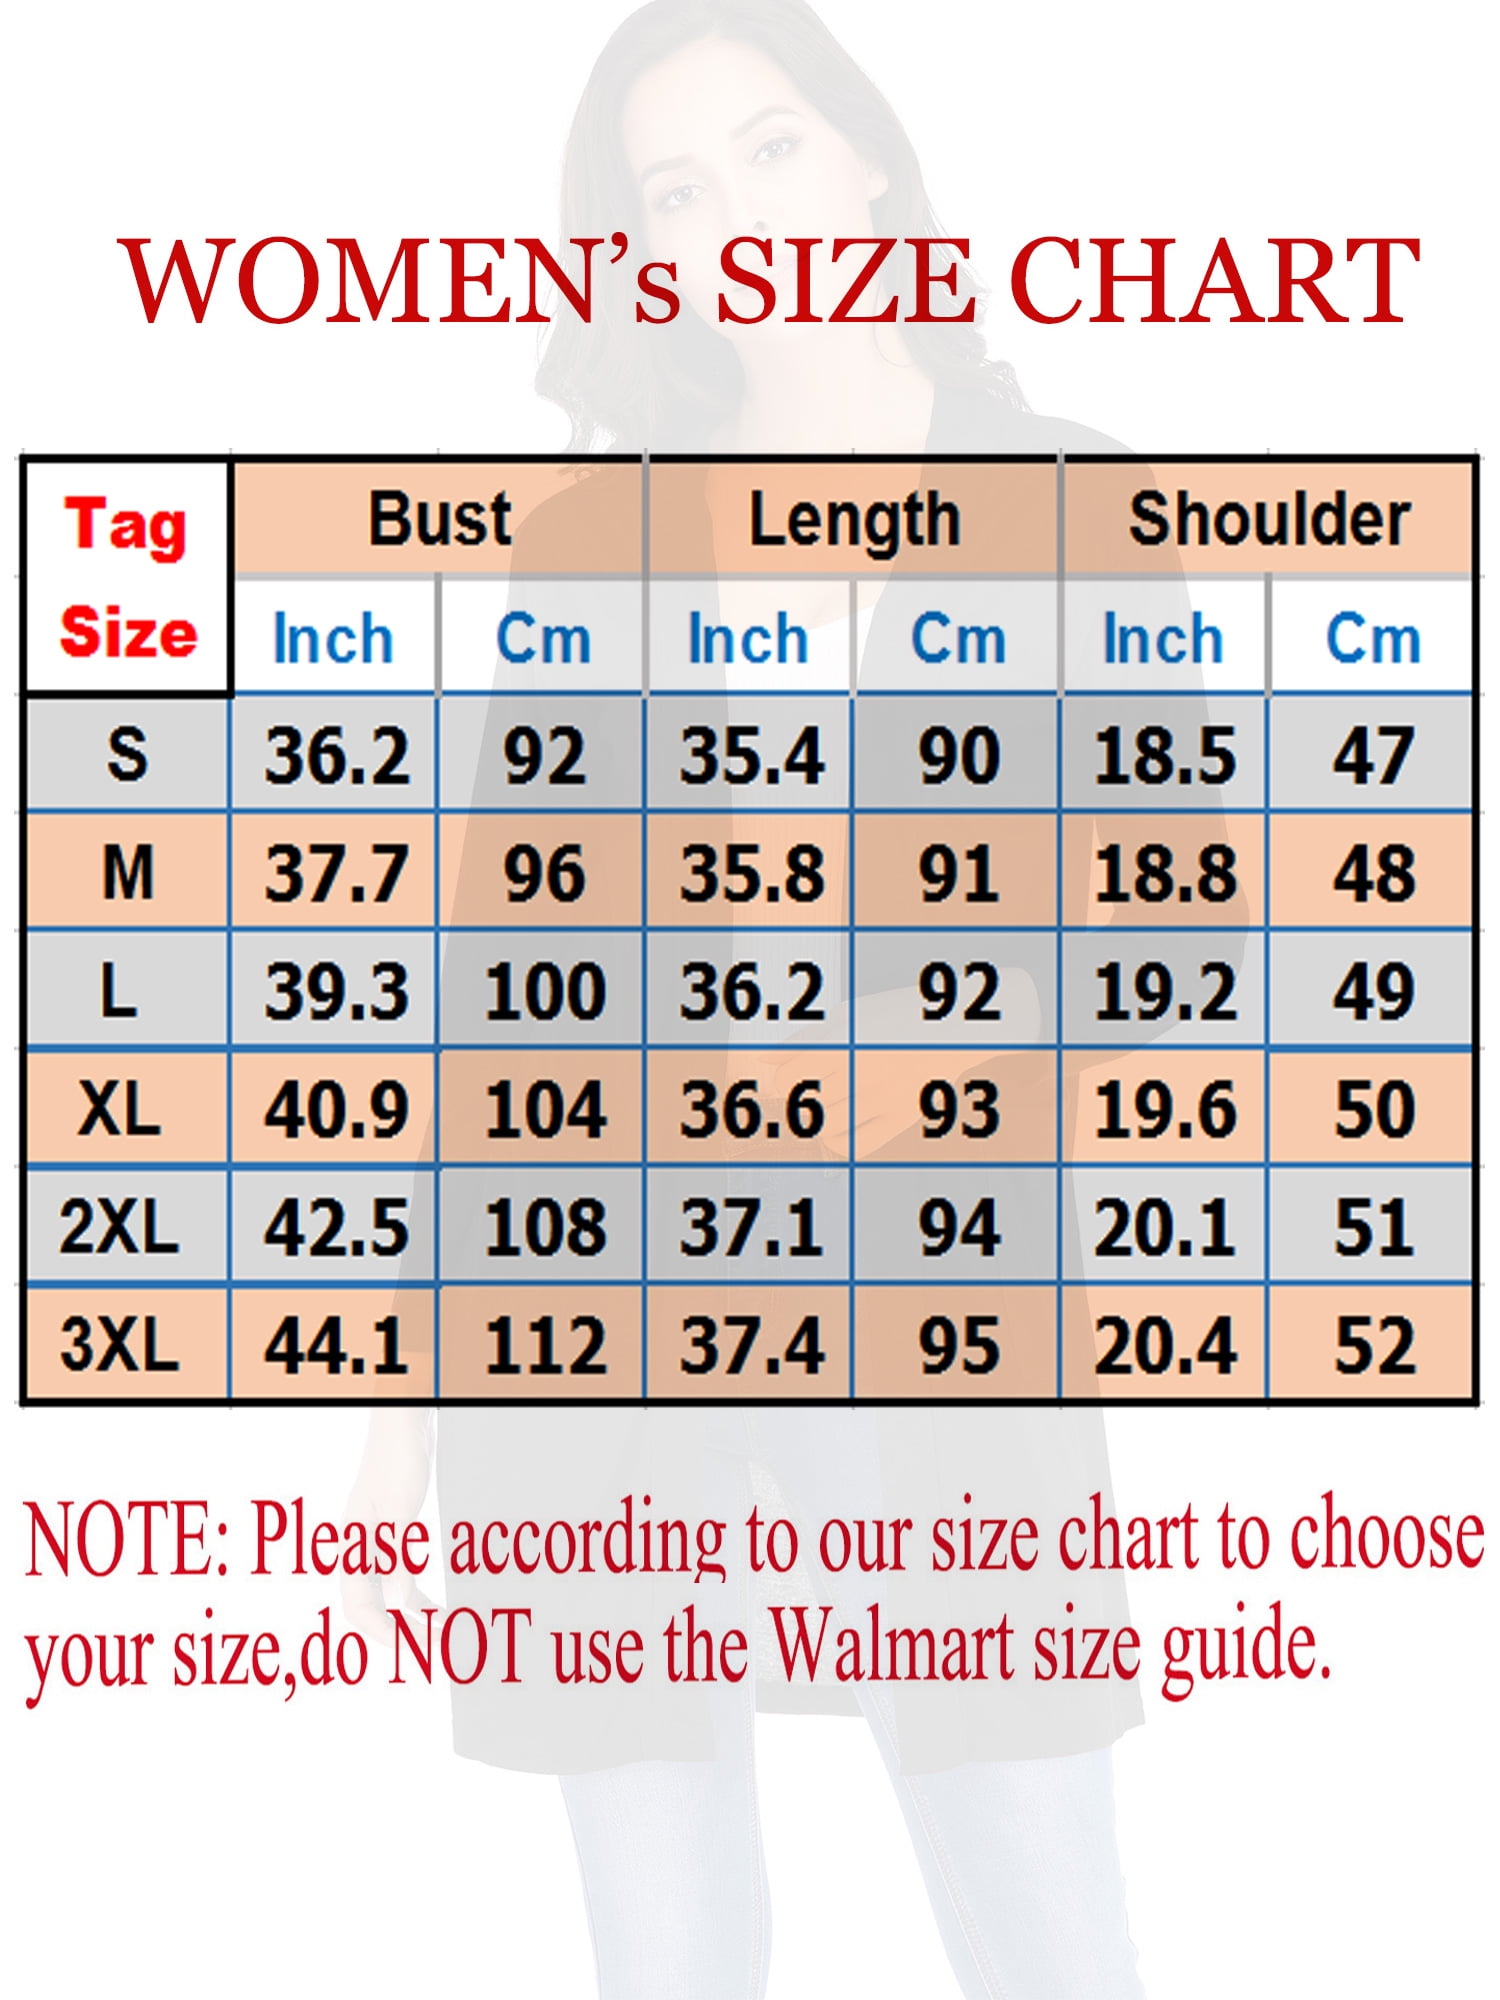 Walmart Vest Size Chart